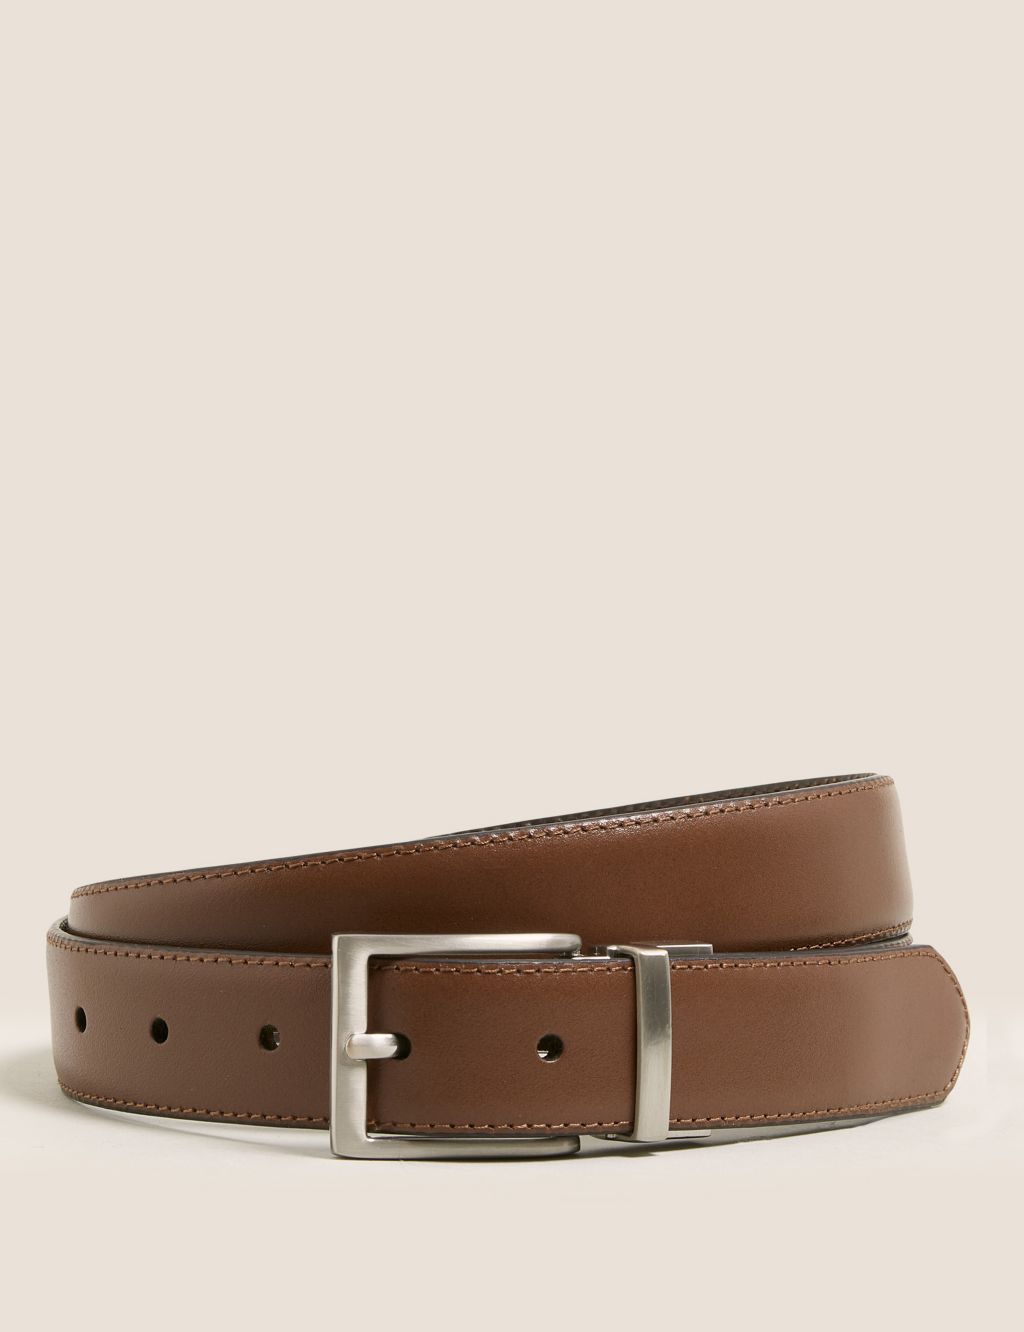 Leather Reversible Belt image 1